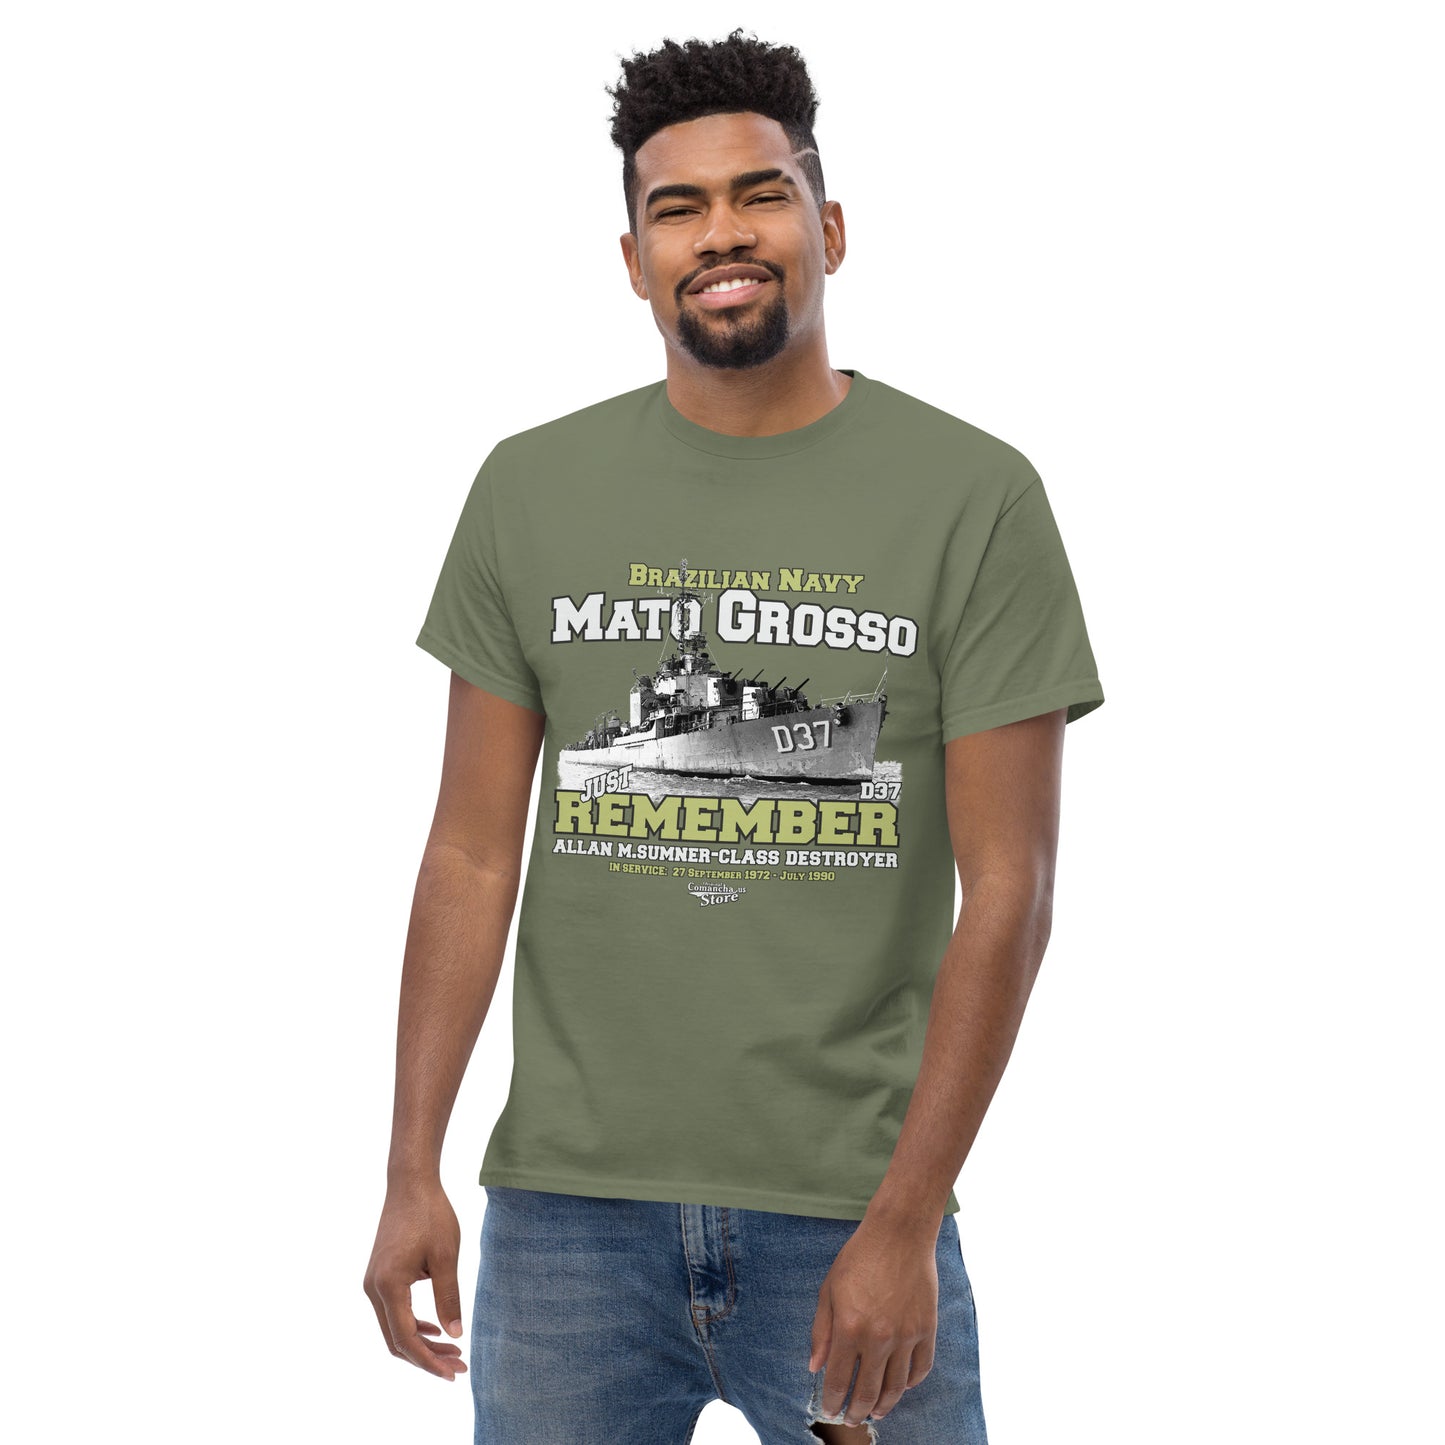 Mato Grosso D34 Destroyer t-shirt